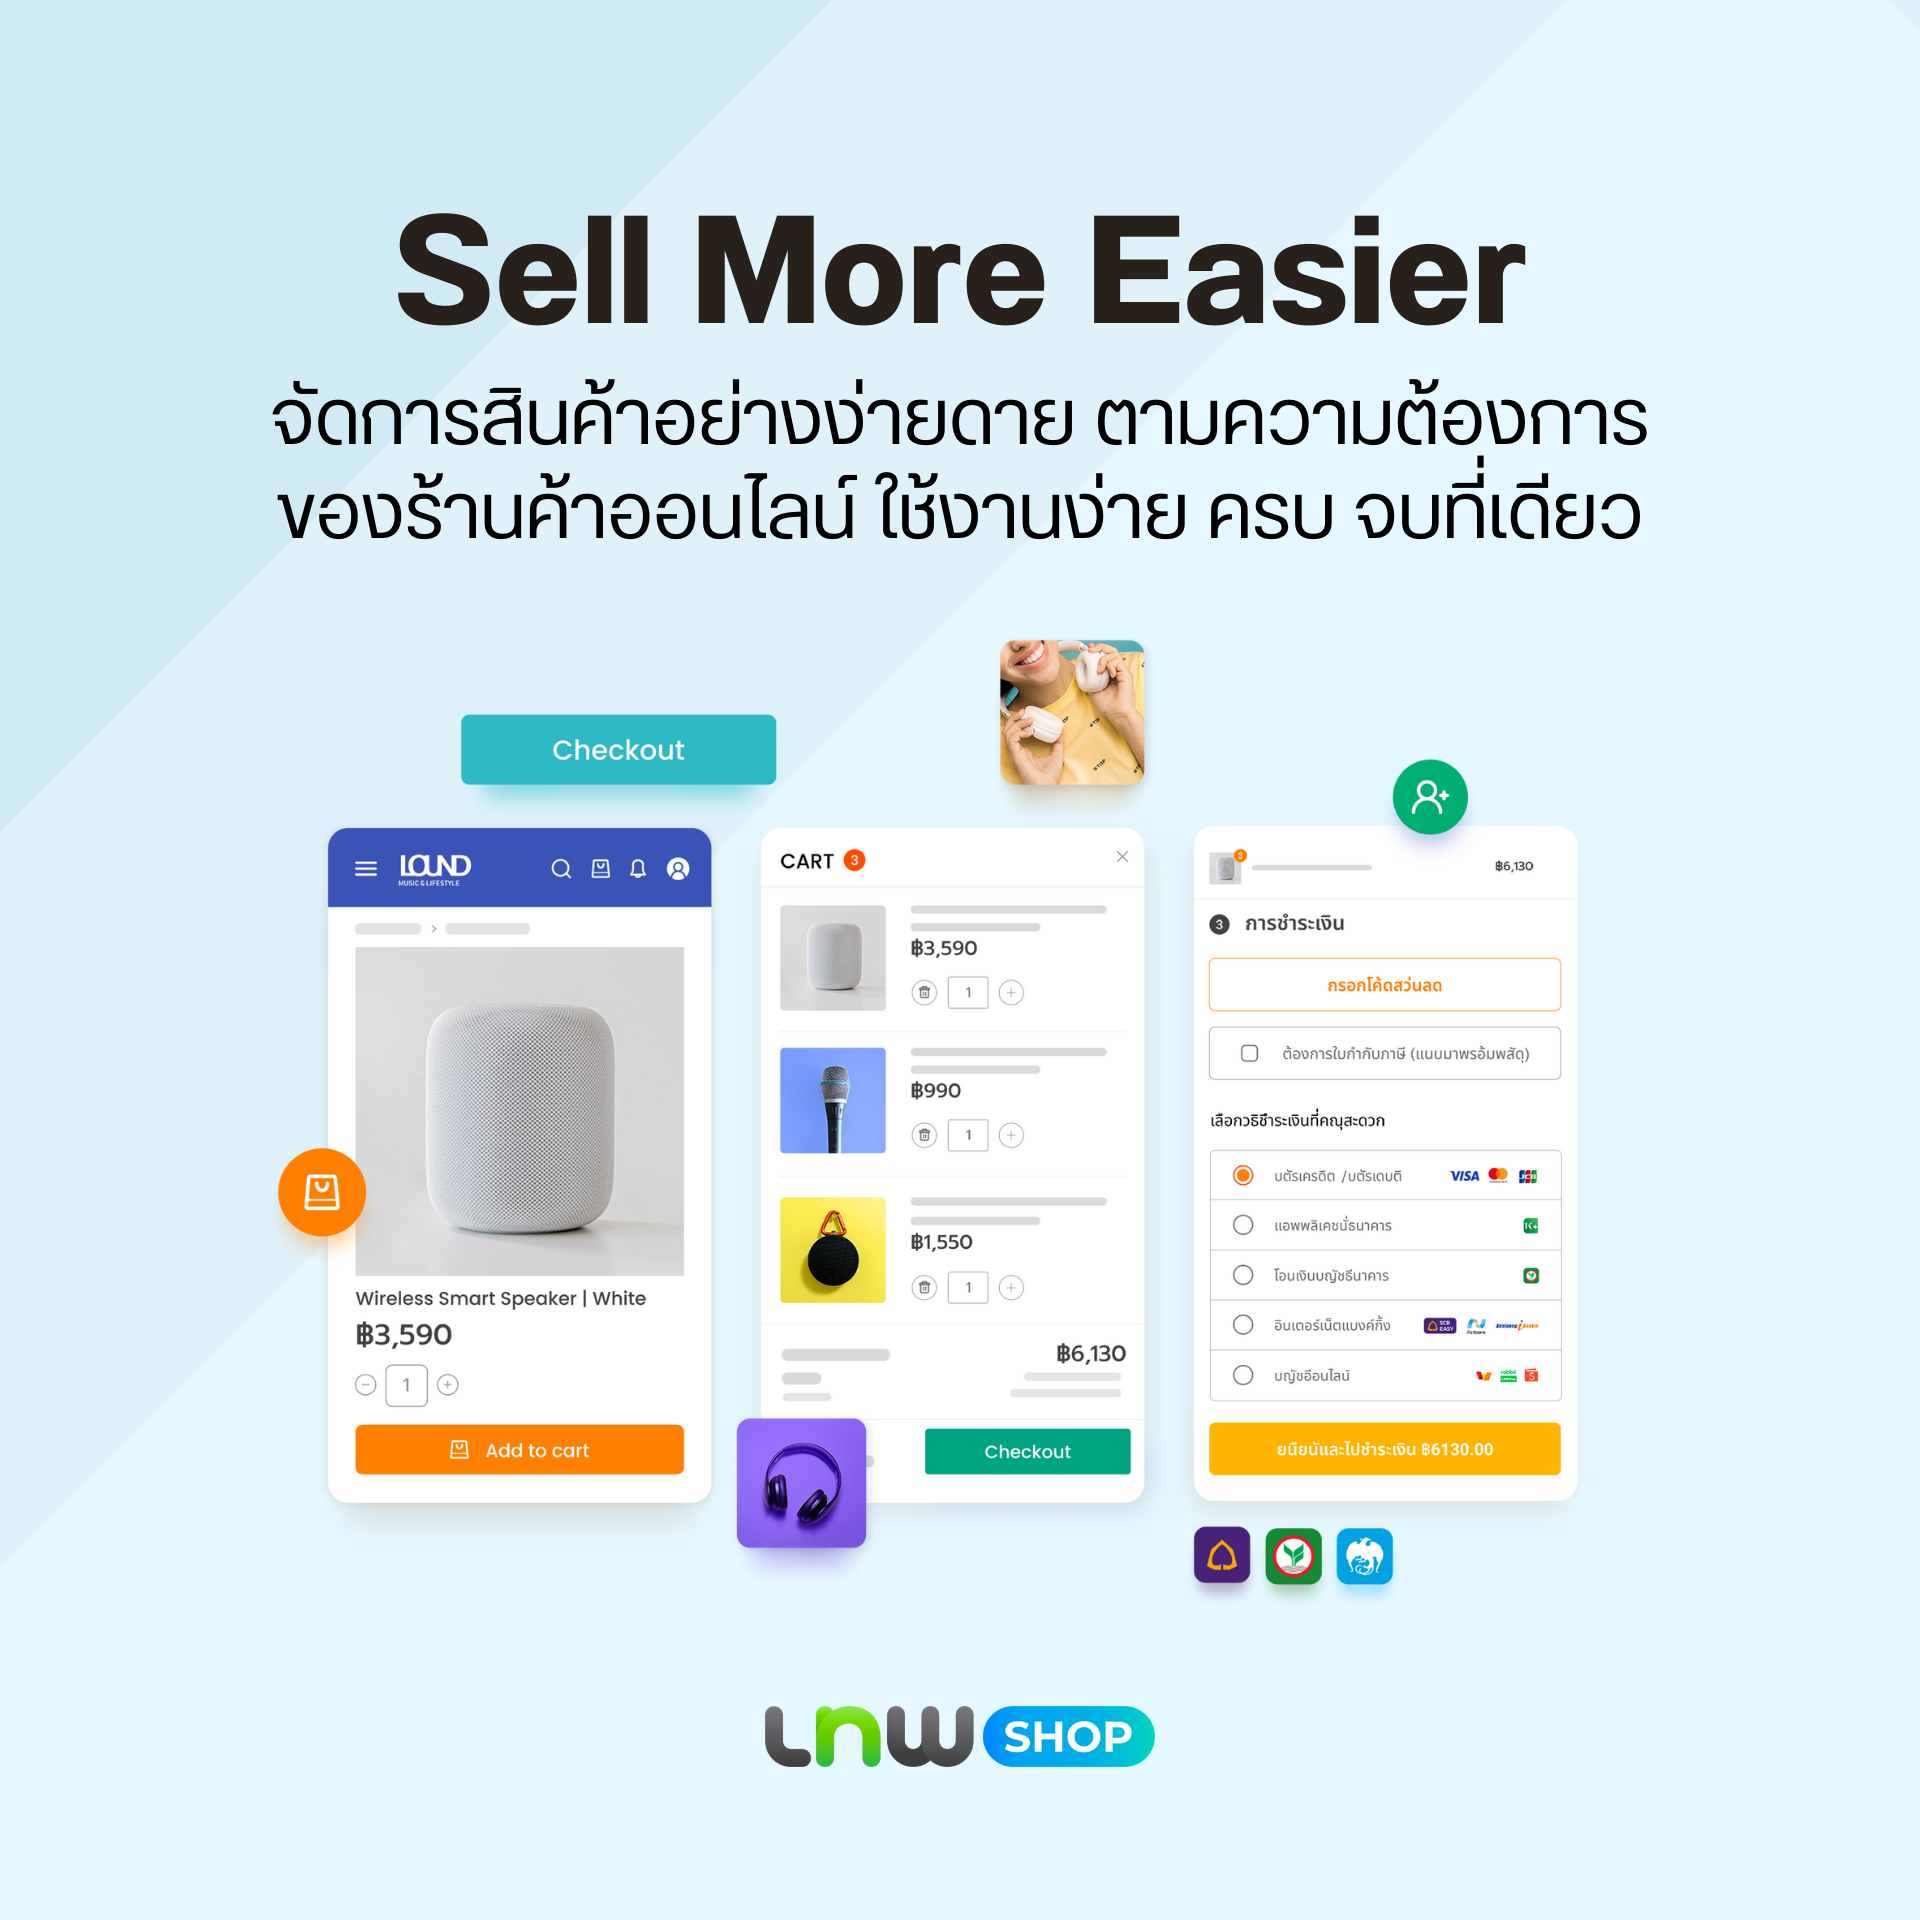 LnwShop WebStore - Sell More Easier